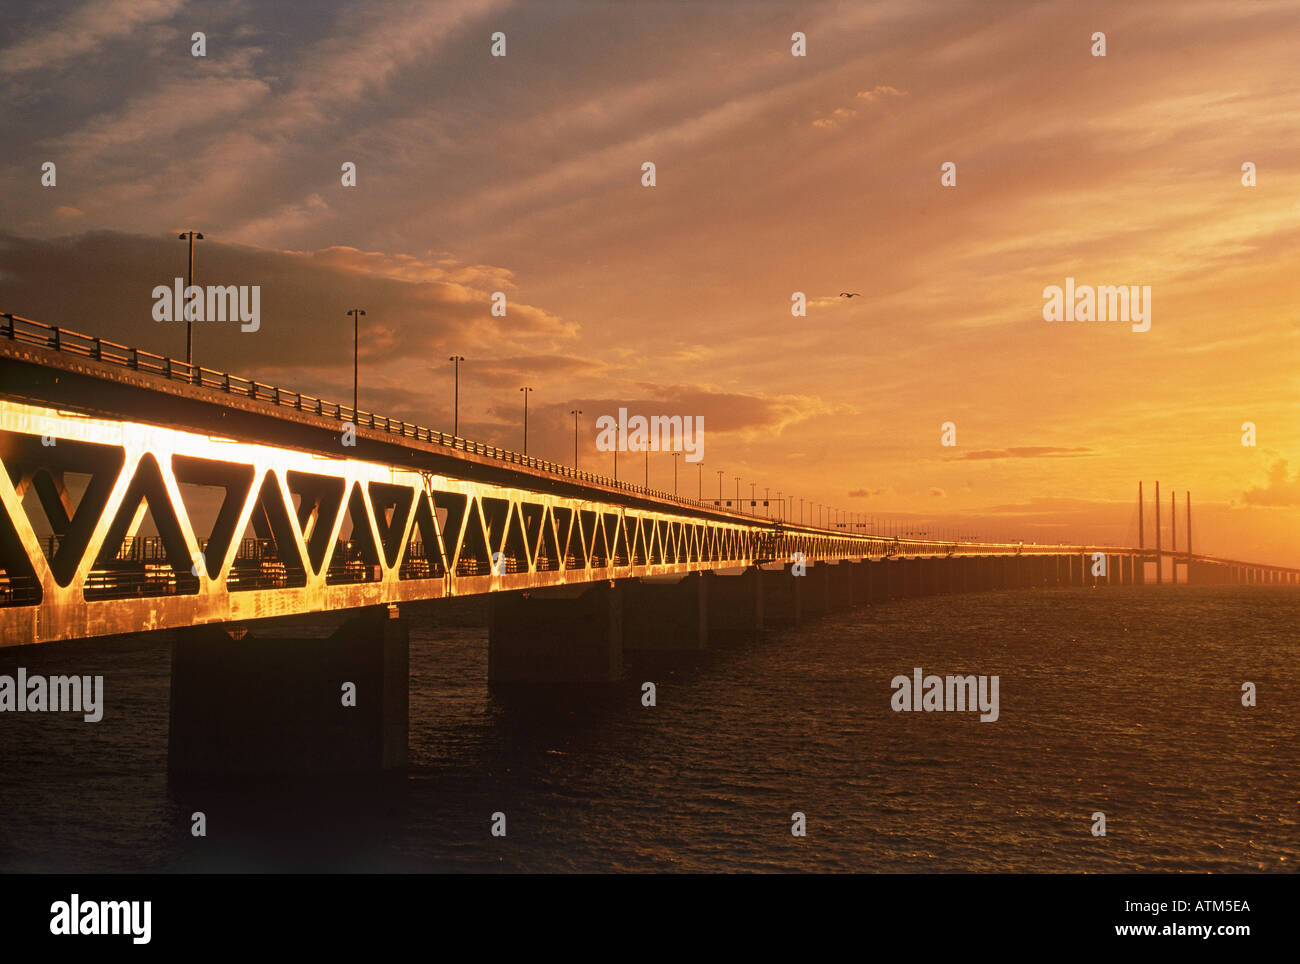 Ponte di Öresund o collegamento Øresund che collega la Danimarca e la Svezia Foto Stock